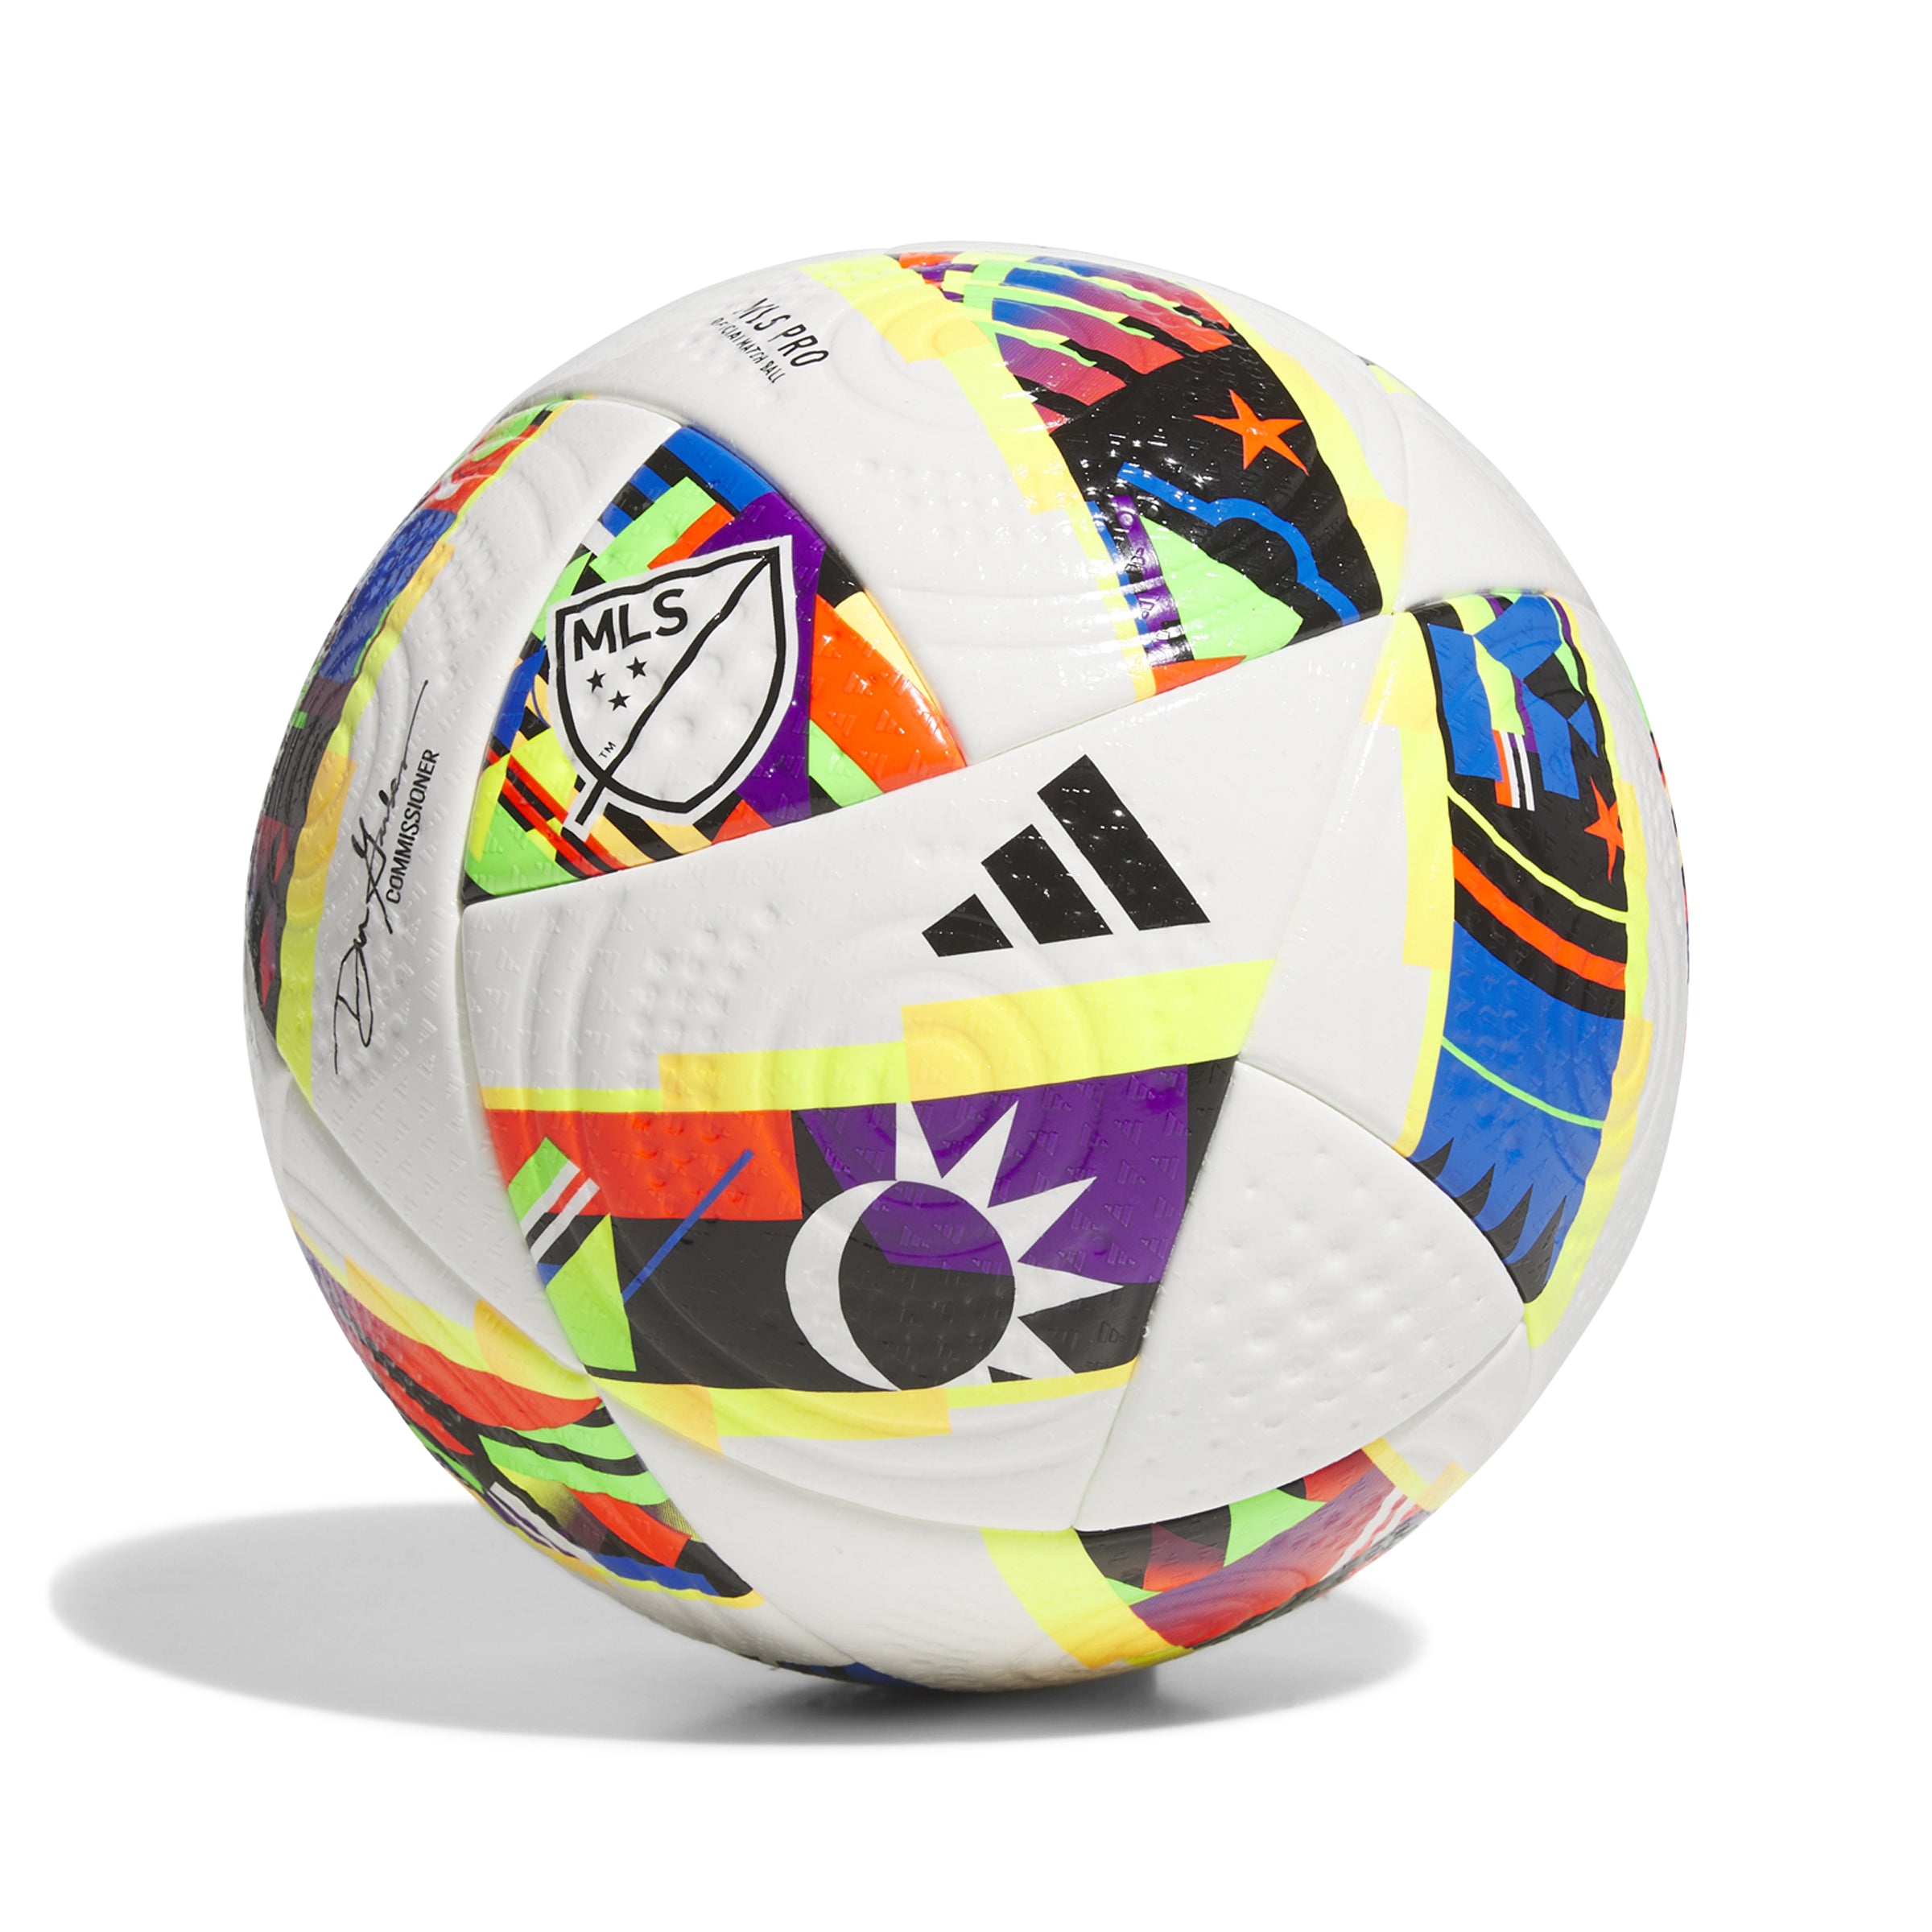 Adidas MLS Pro Ball - IP1625